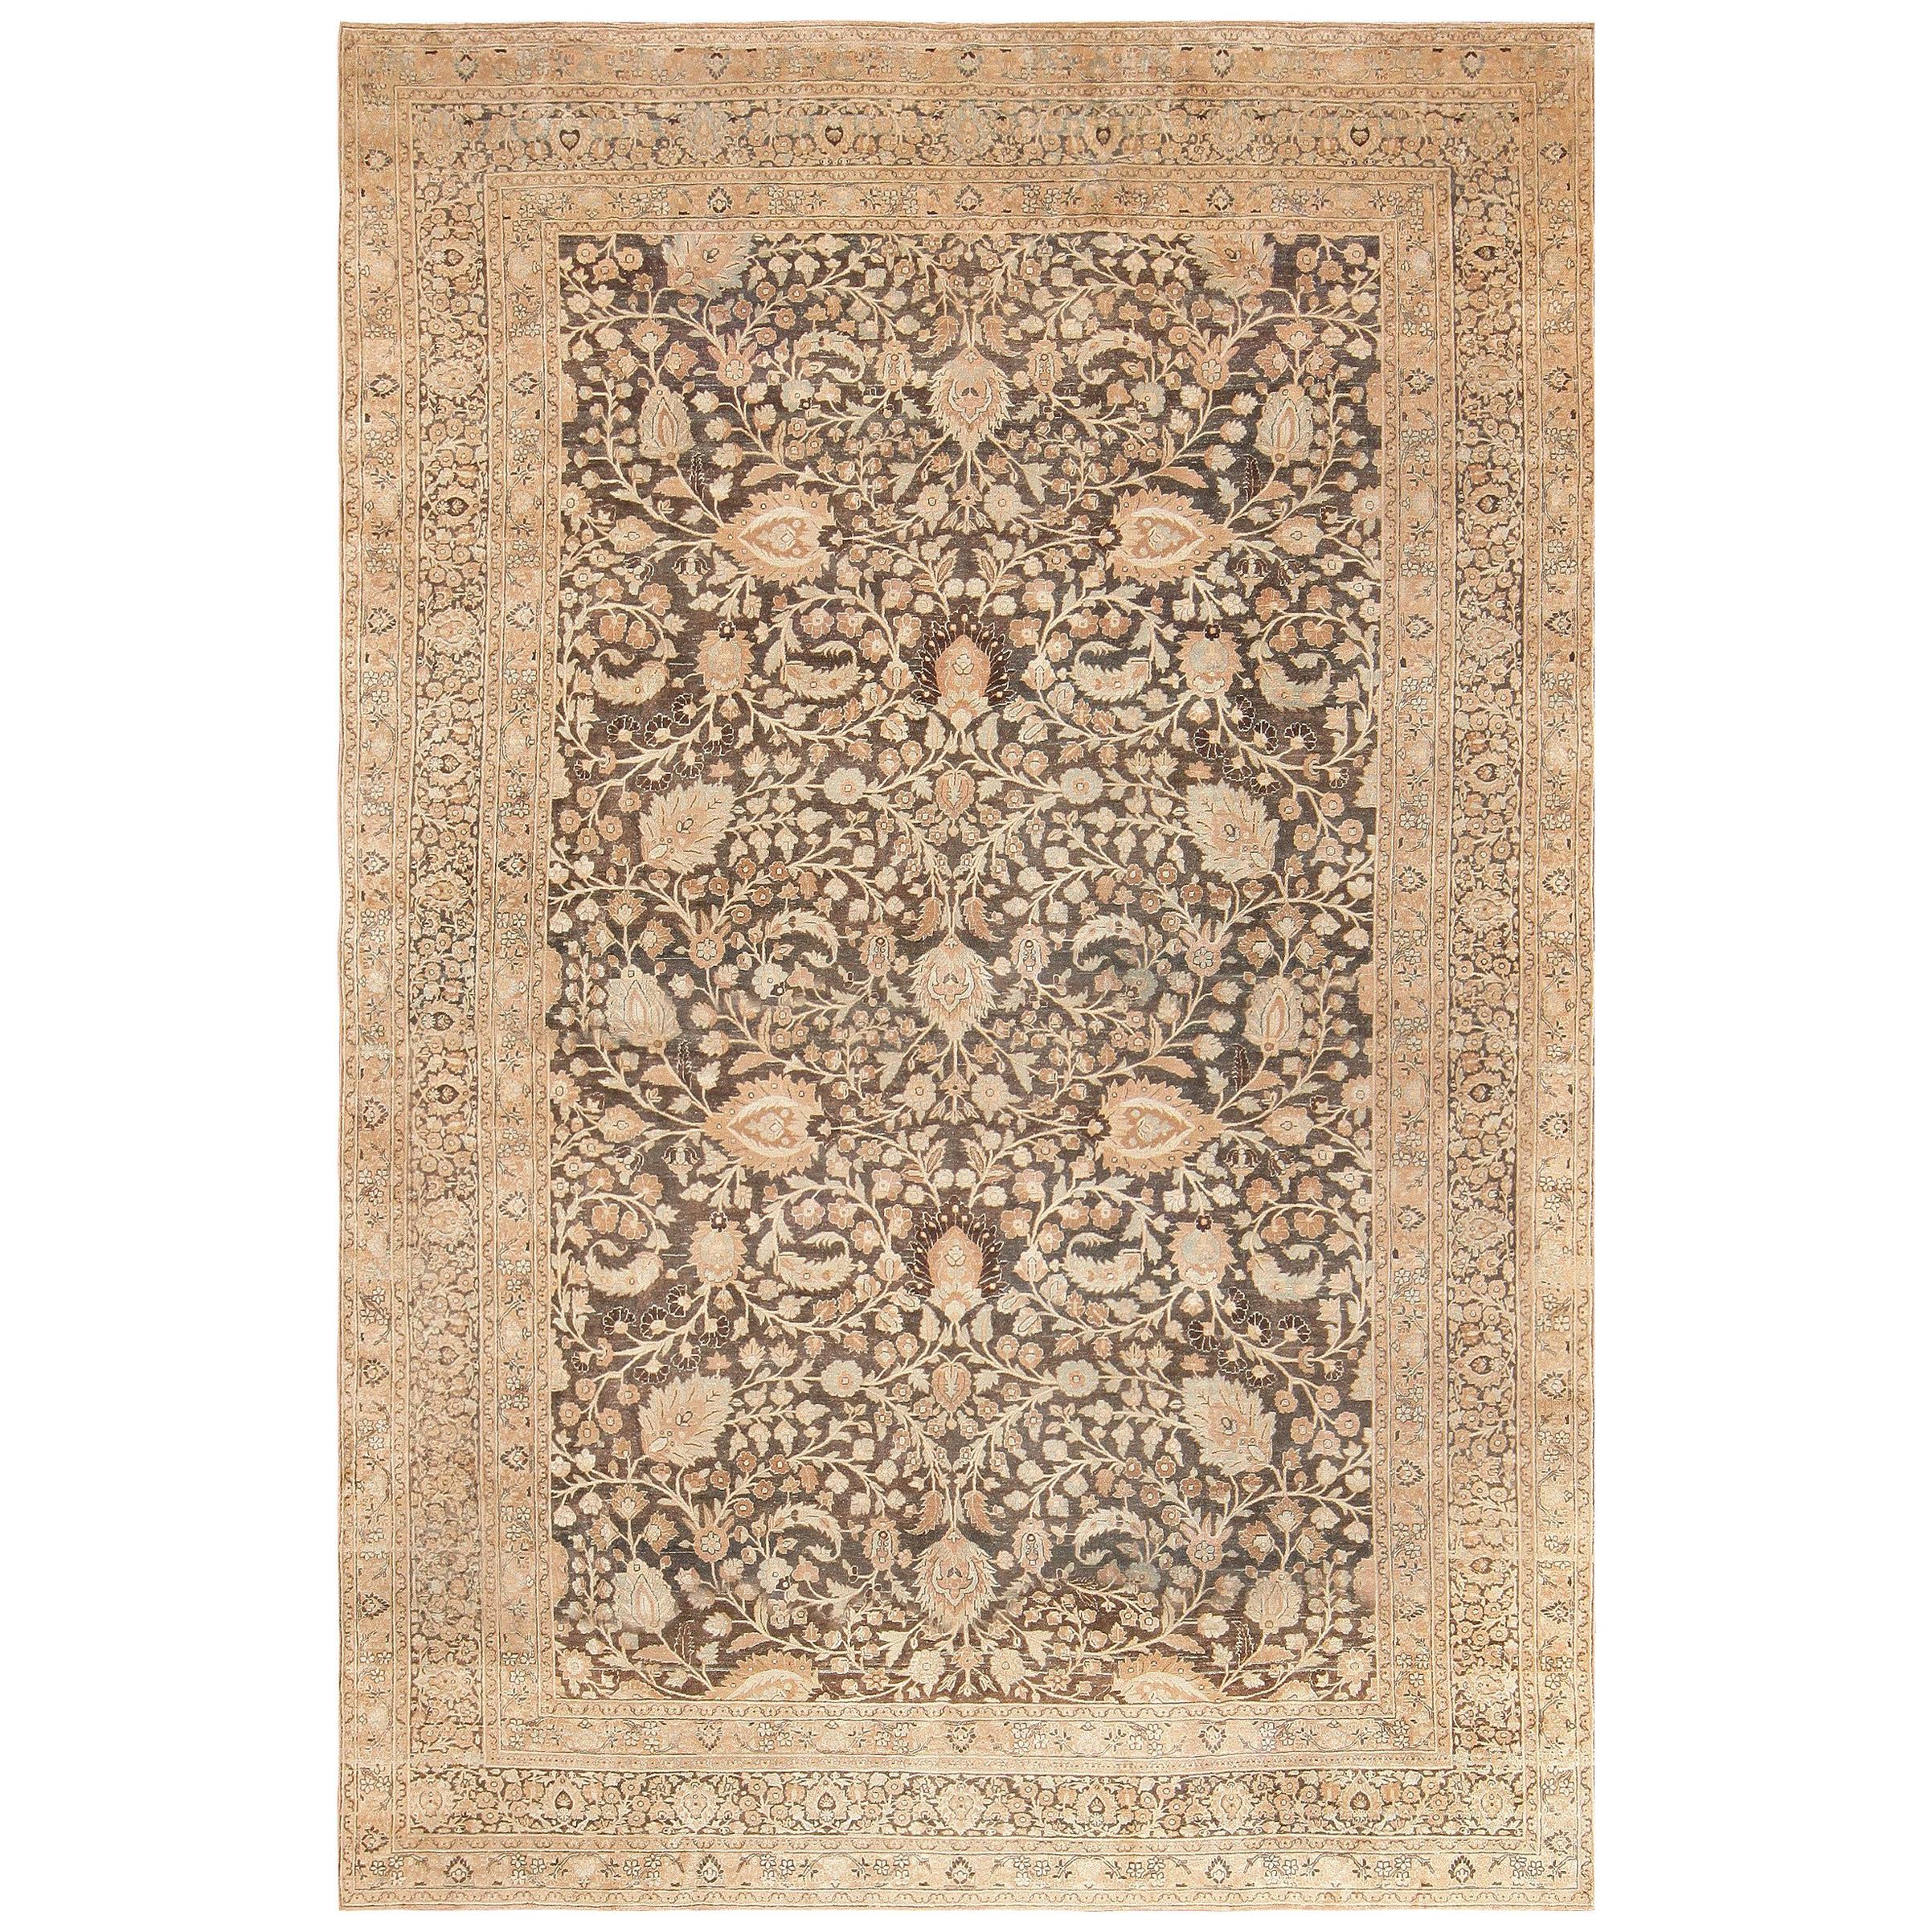 Antique Persian Khorassan Carpet. Size: 12 ft x 17 ft 6 in